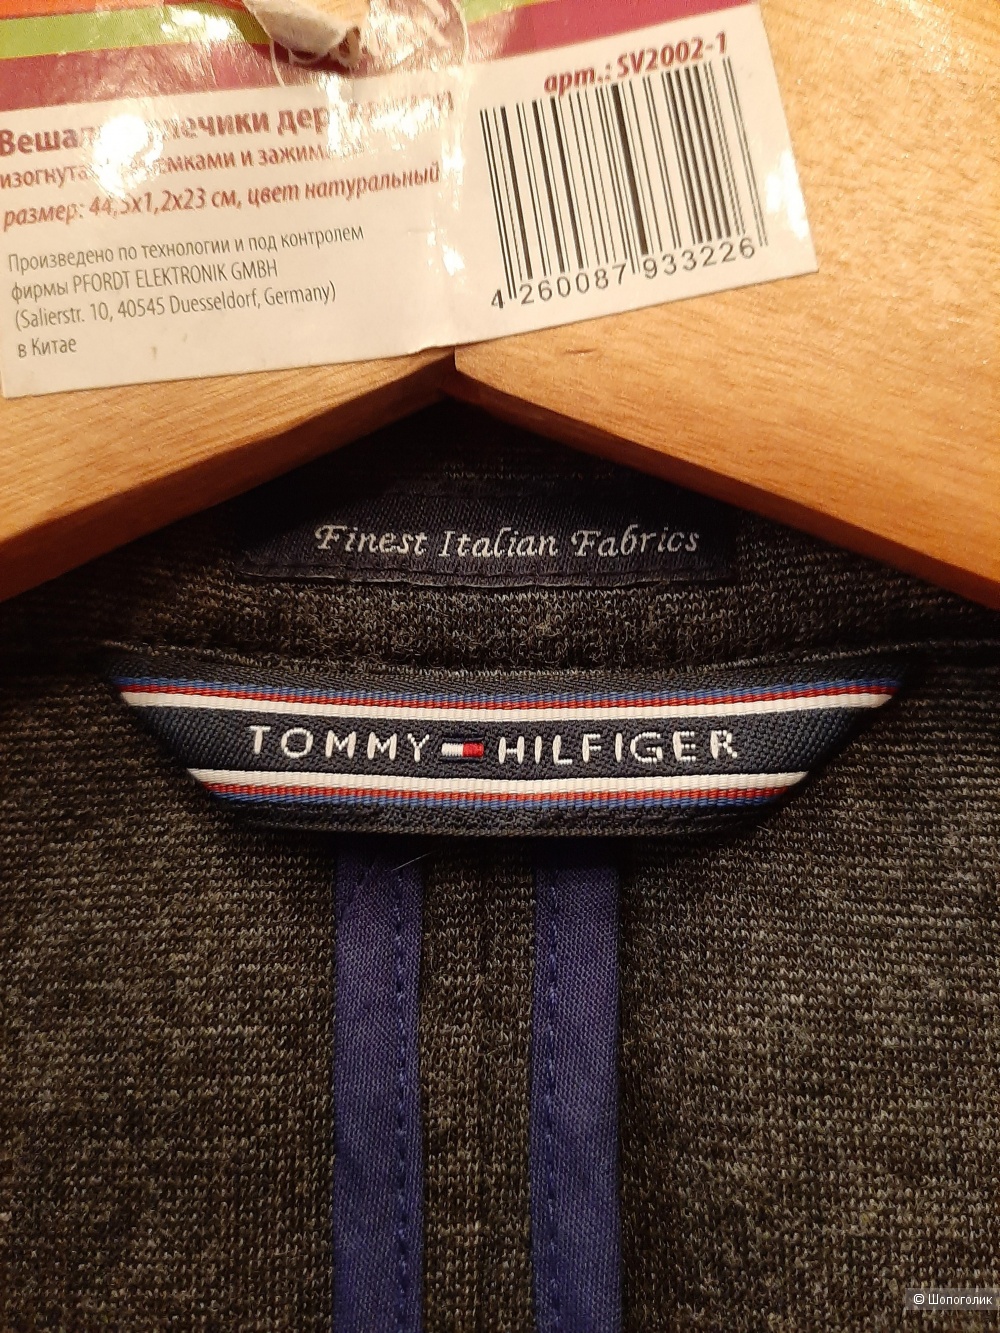 Пиджак Tommy hilfiger р.44